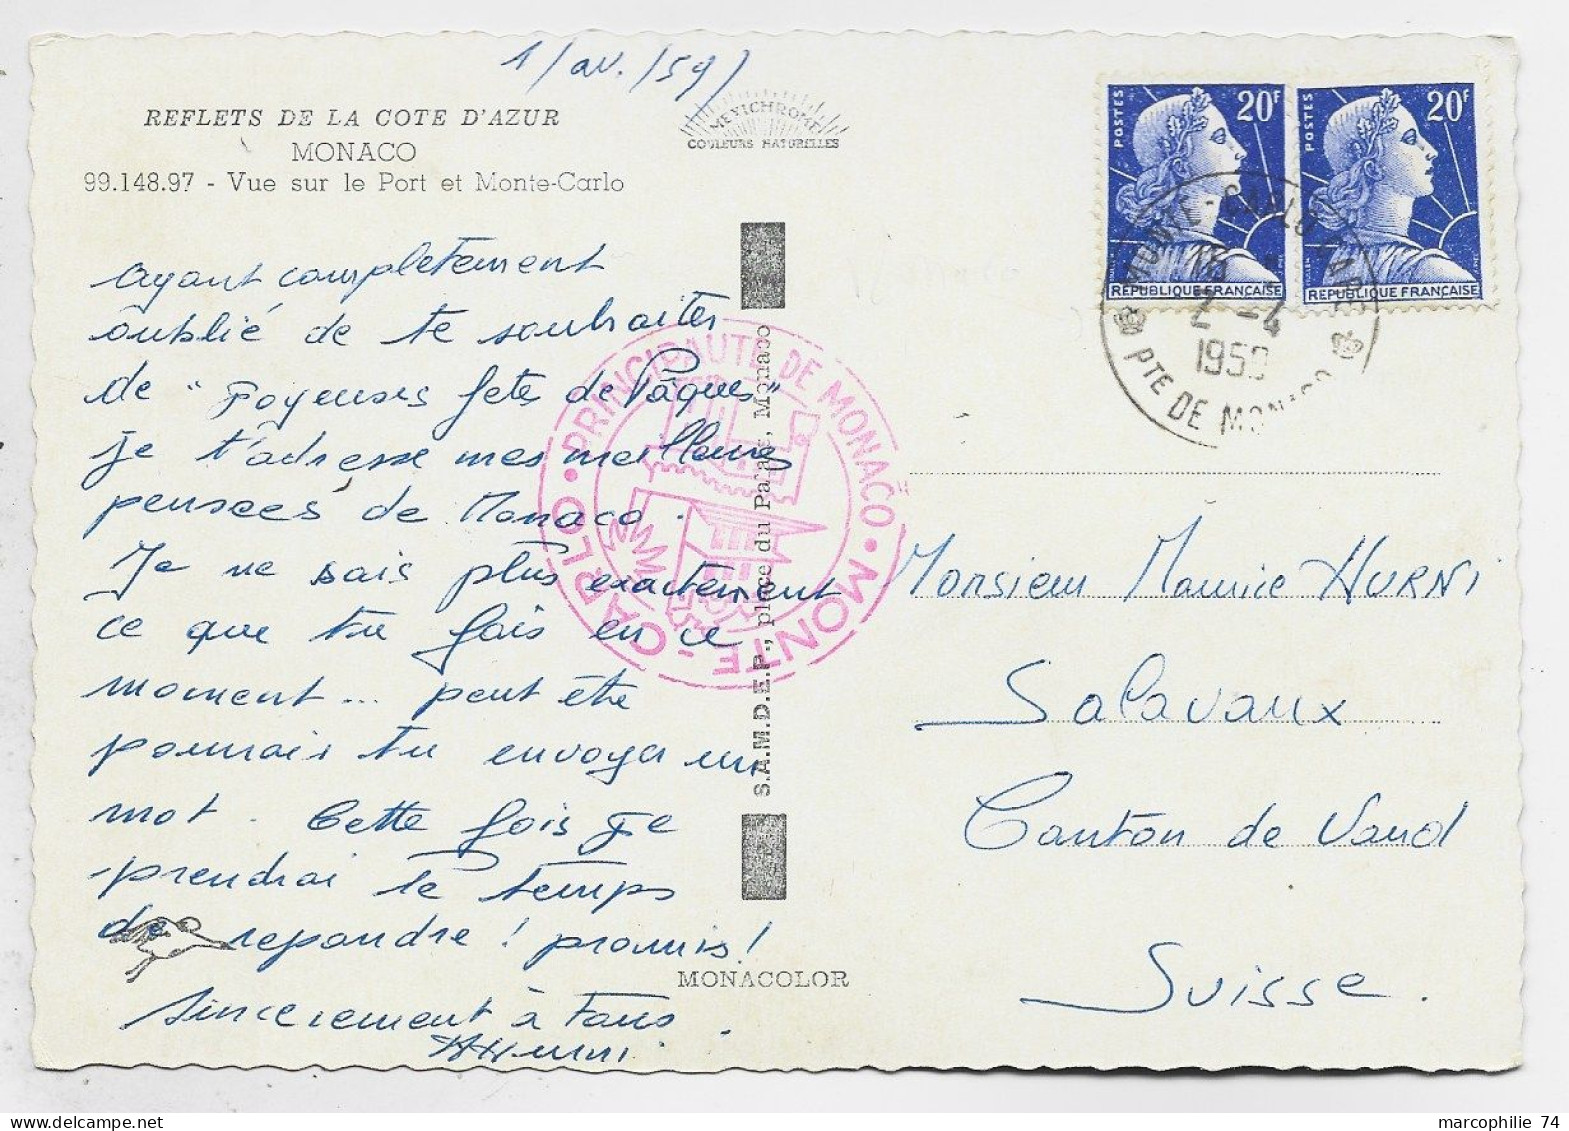 MULLER 20FRX2 CARTE TIMBRE A DATE MONTE CARLO  GARE 2.4.1959 PTE DE MONACO POUR SUISSE OBLITERATION RARE COTE 160€ - Bahnpost